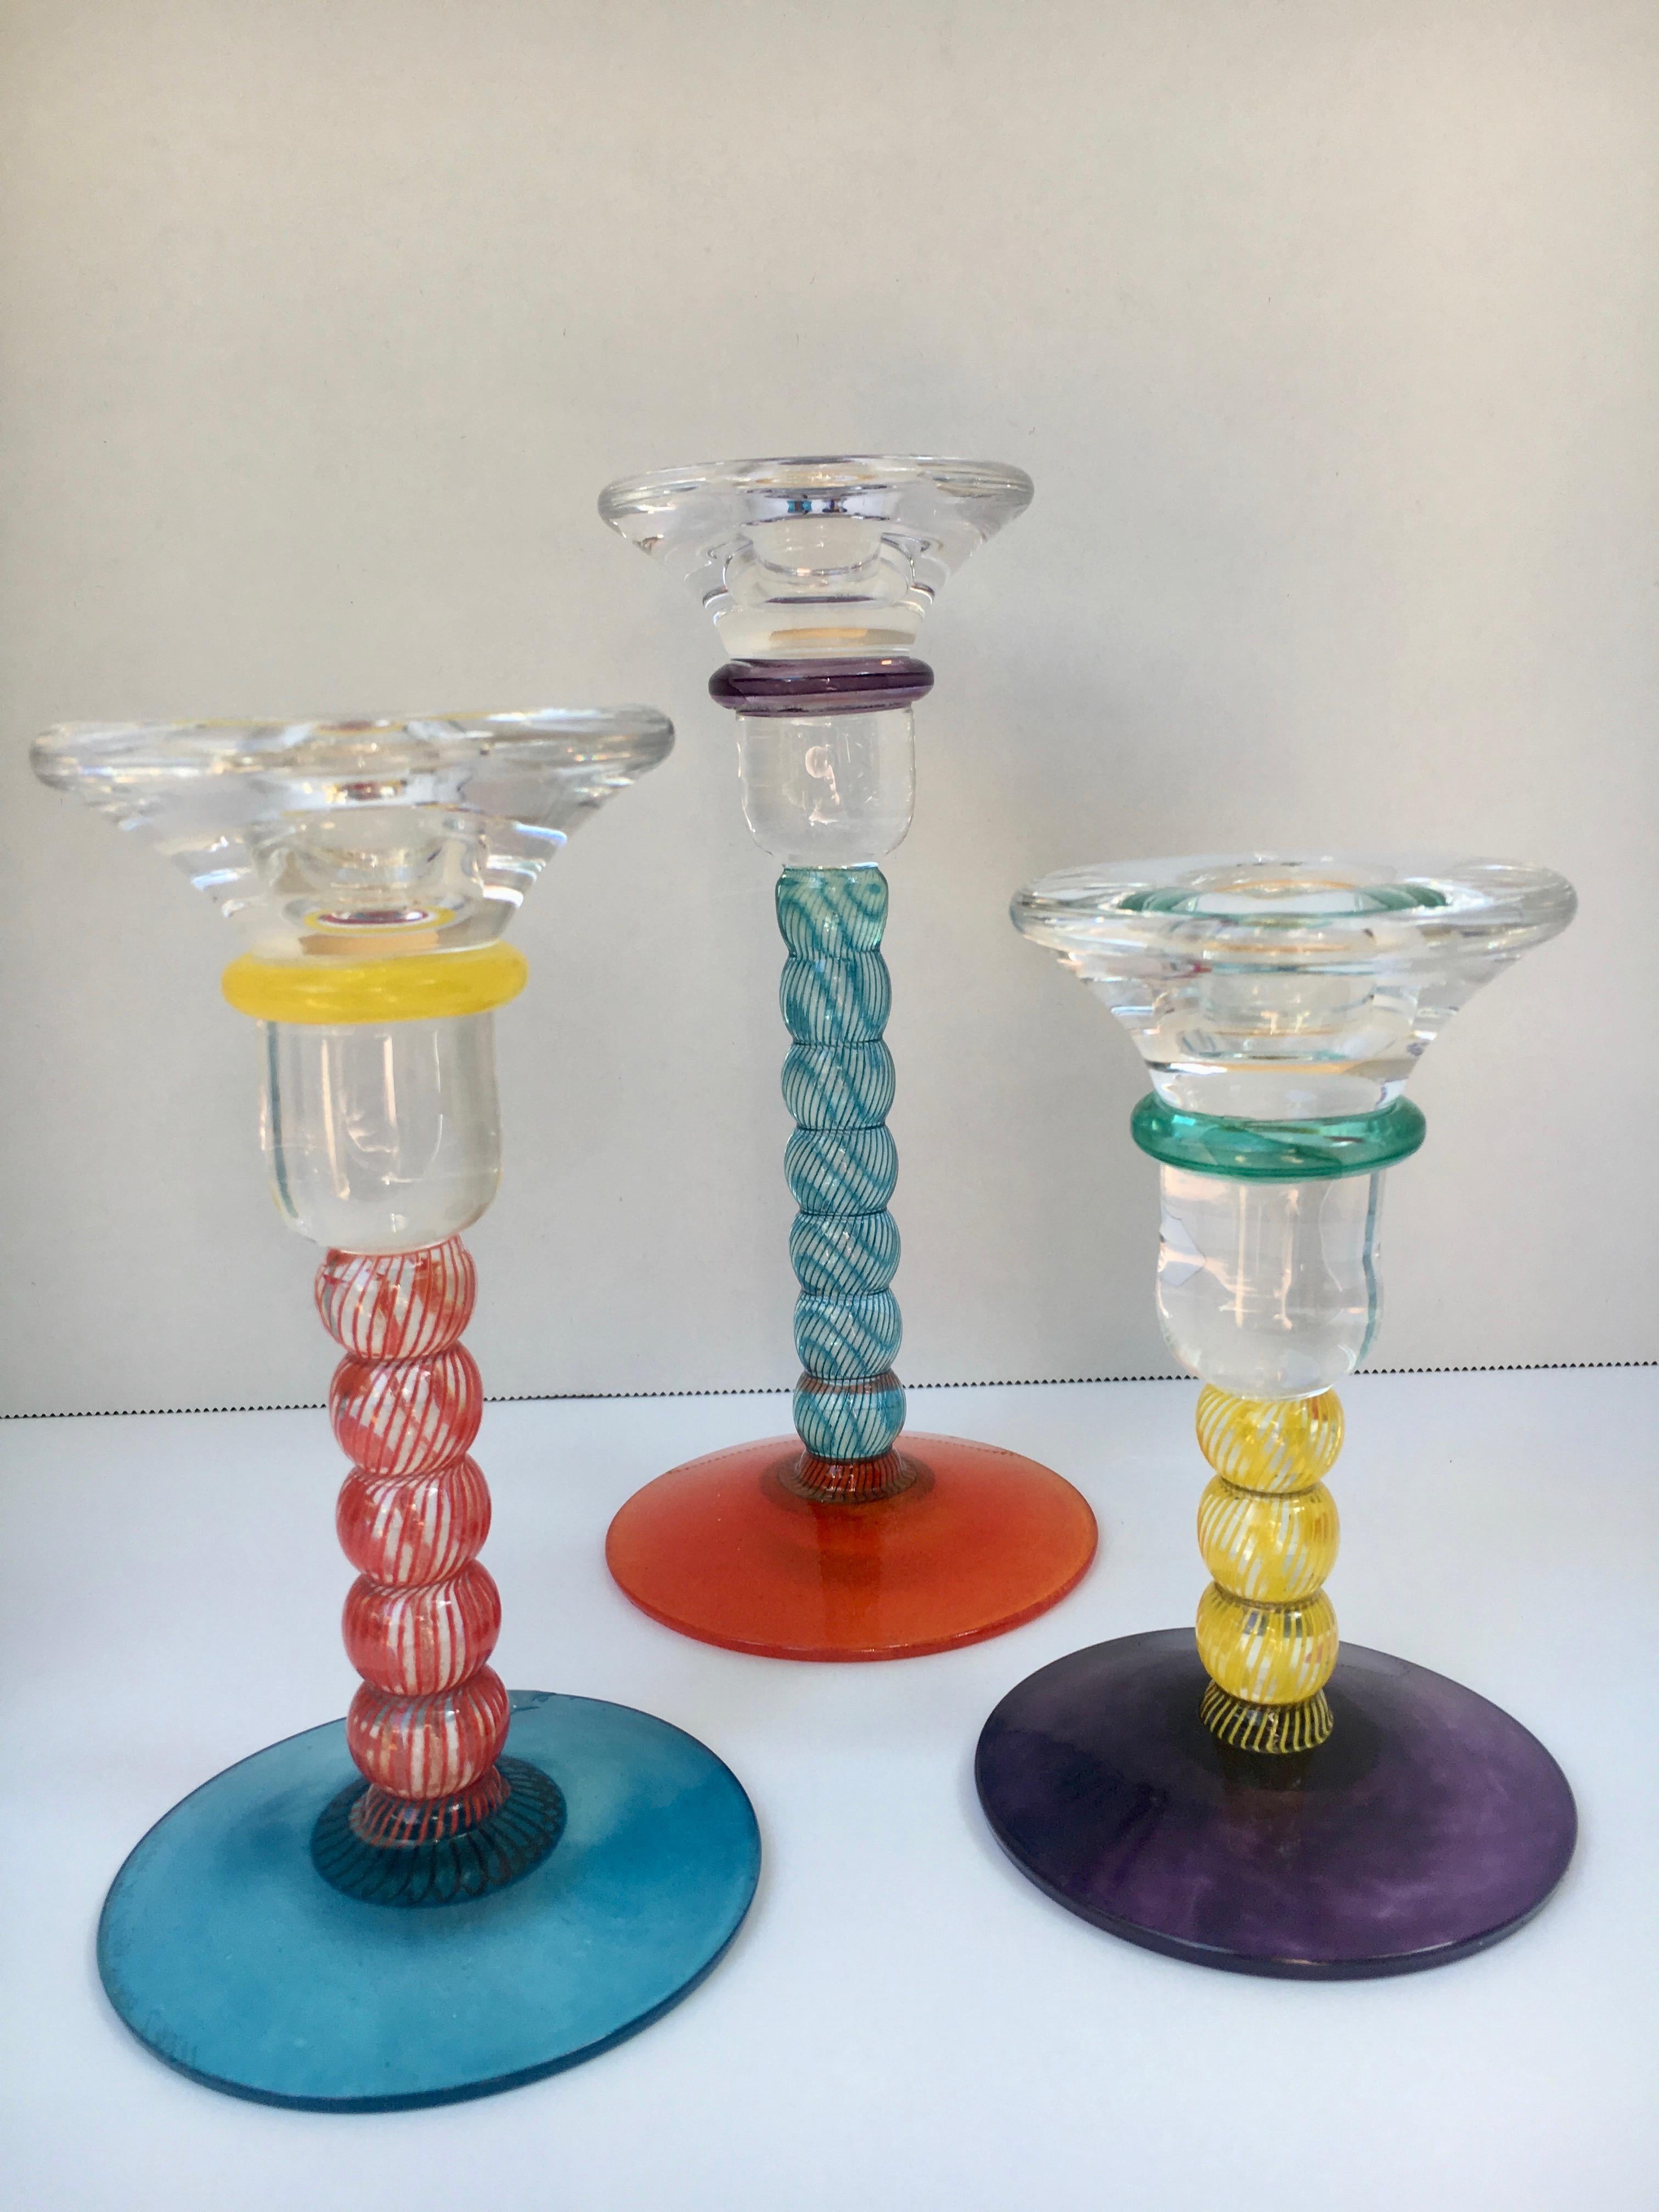 Set of 3 Kosta Boda candlesticks - Artfully designed Art glass, Signed on the underside

Measures: 3.75 diam. 
5.5